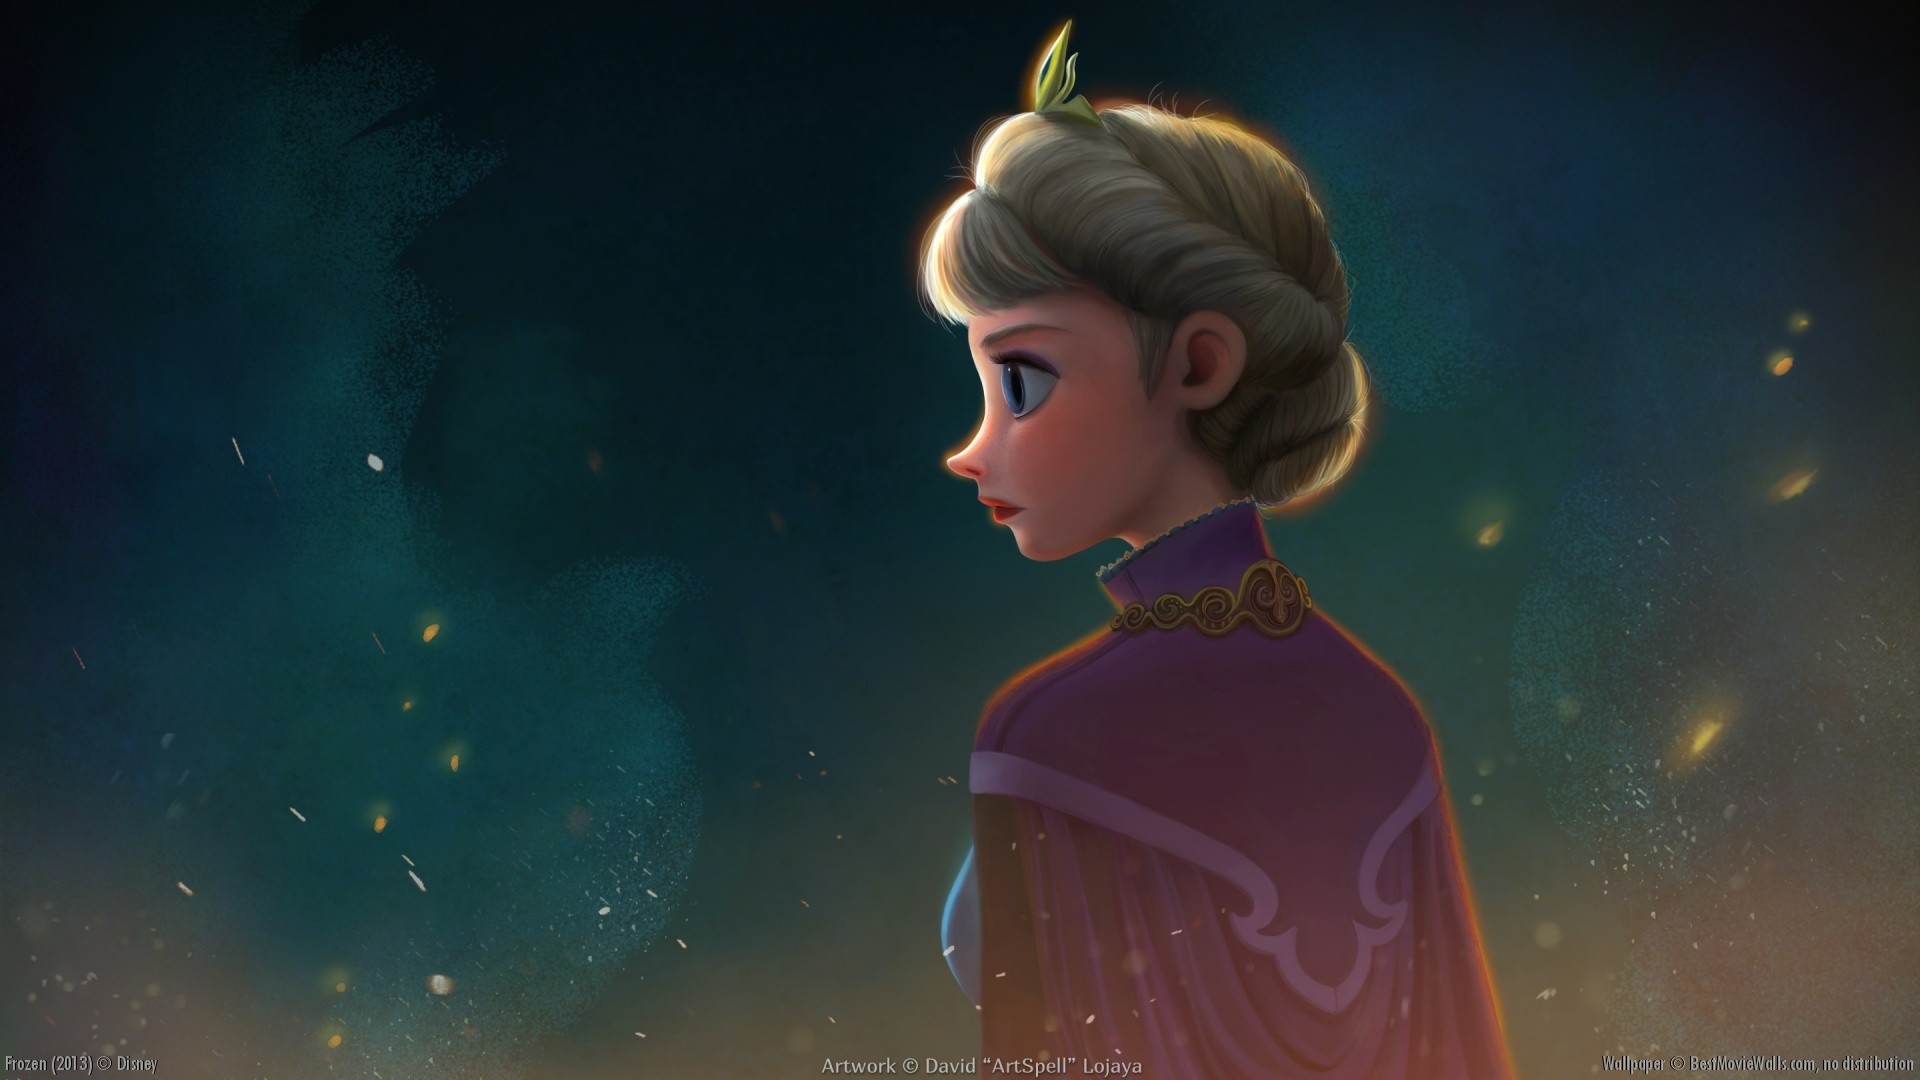 General 1920x1080 Frozen (movie) Elsa Disney Disney princesses fantasy girl movies animated movies